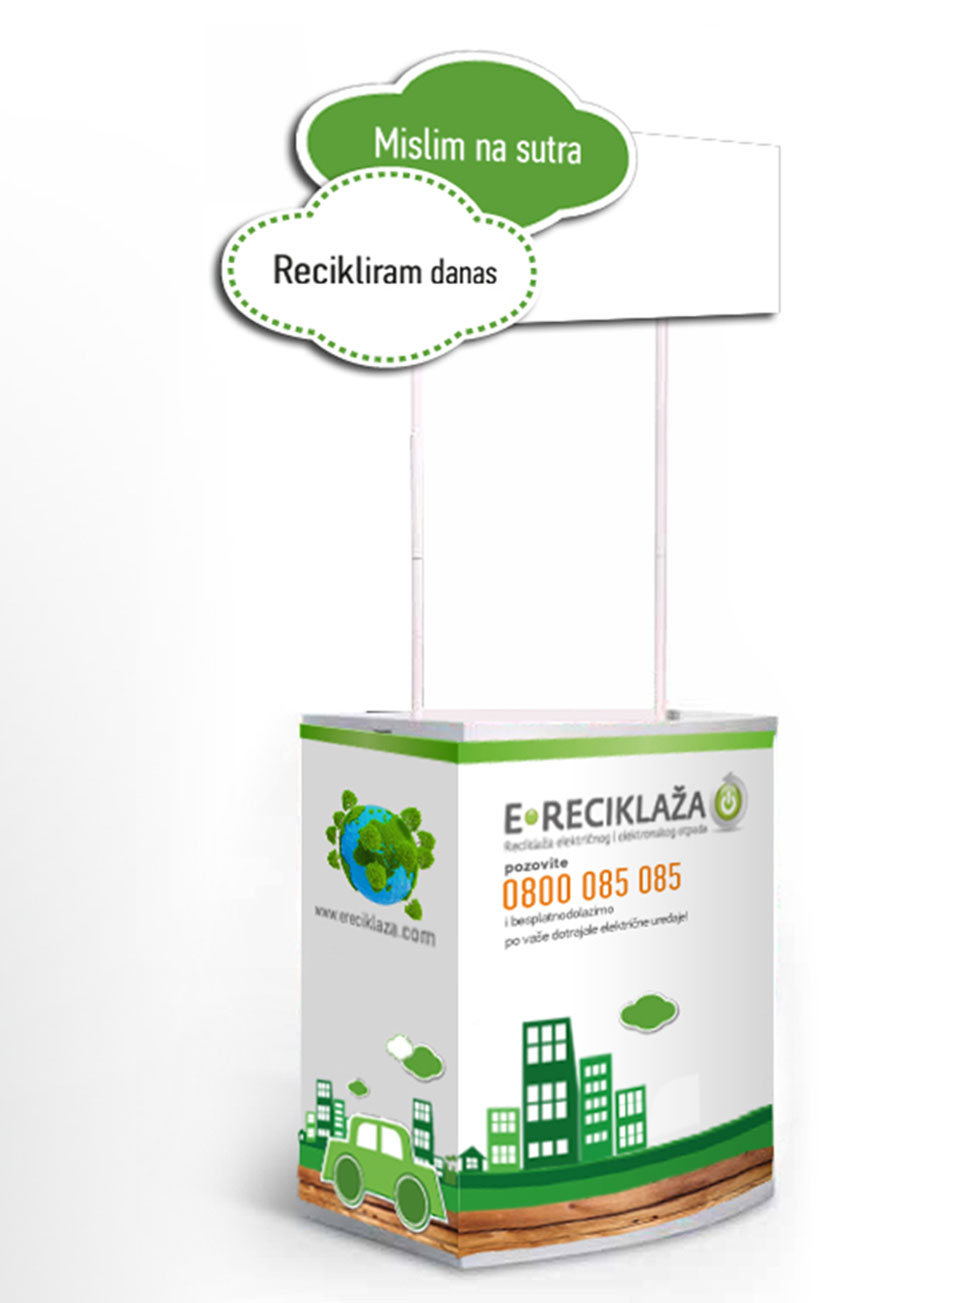 e-reciklaza promo materijal 1